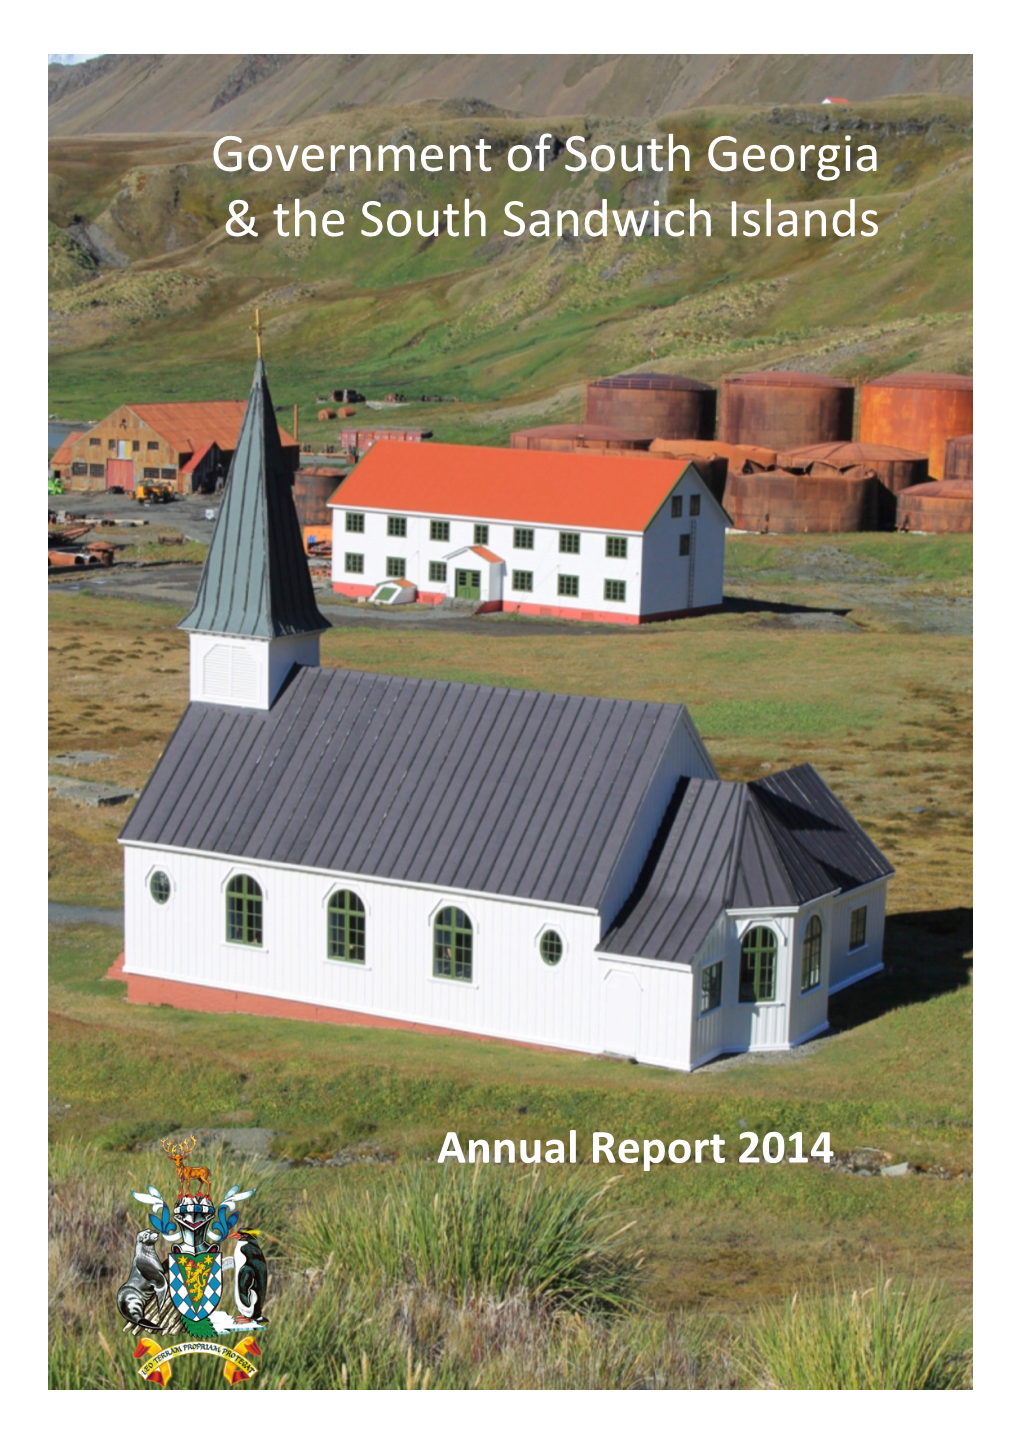 Annual Report 2014.Pptx